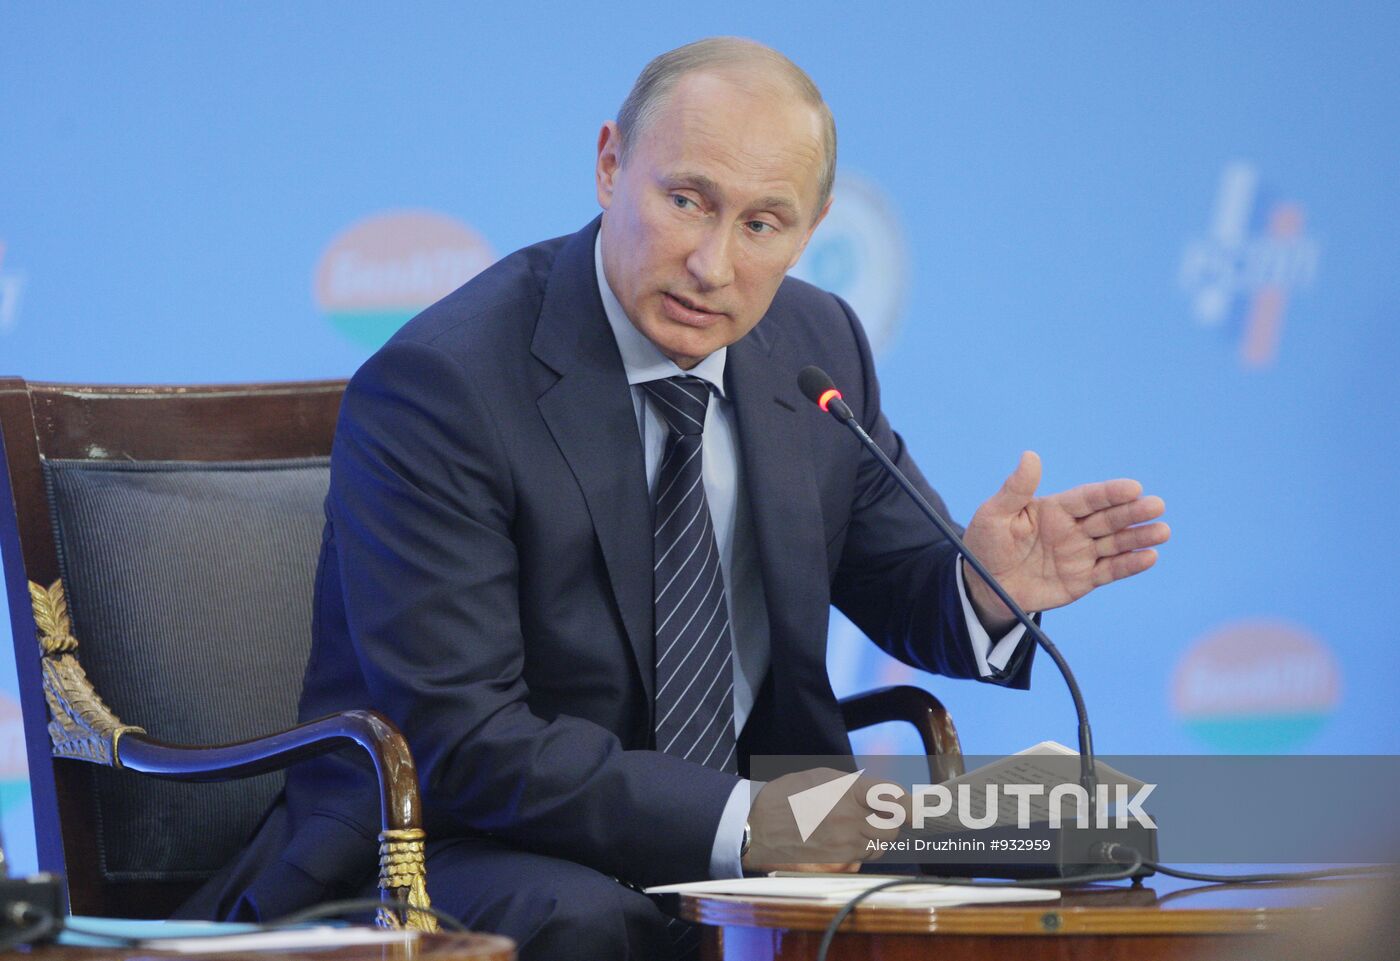 Prime Minister Vladimir Putin attends conference